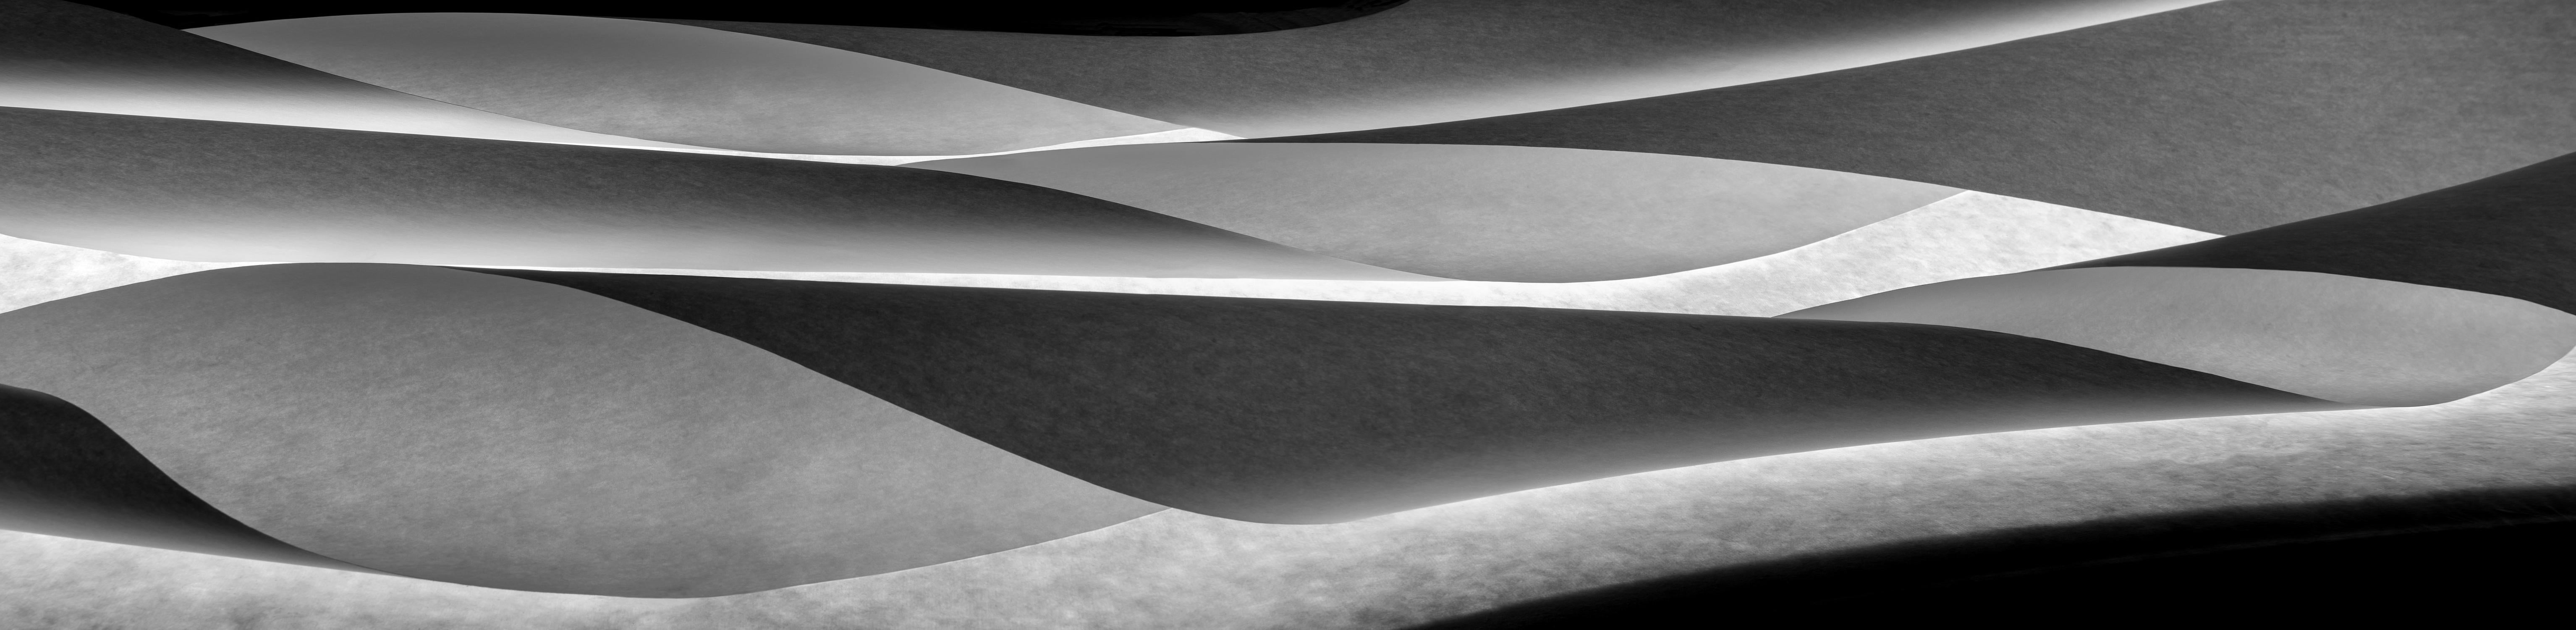 John Dean Black and White Photograph - 'Undercurrents (1/30/22)' - abstract photography - black and white photograph